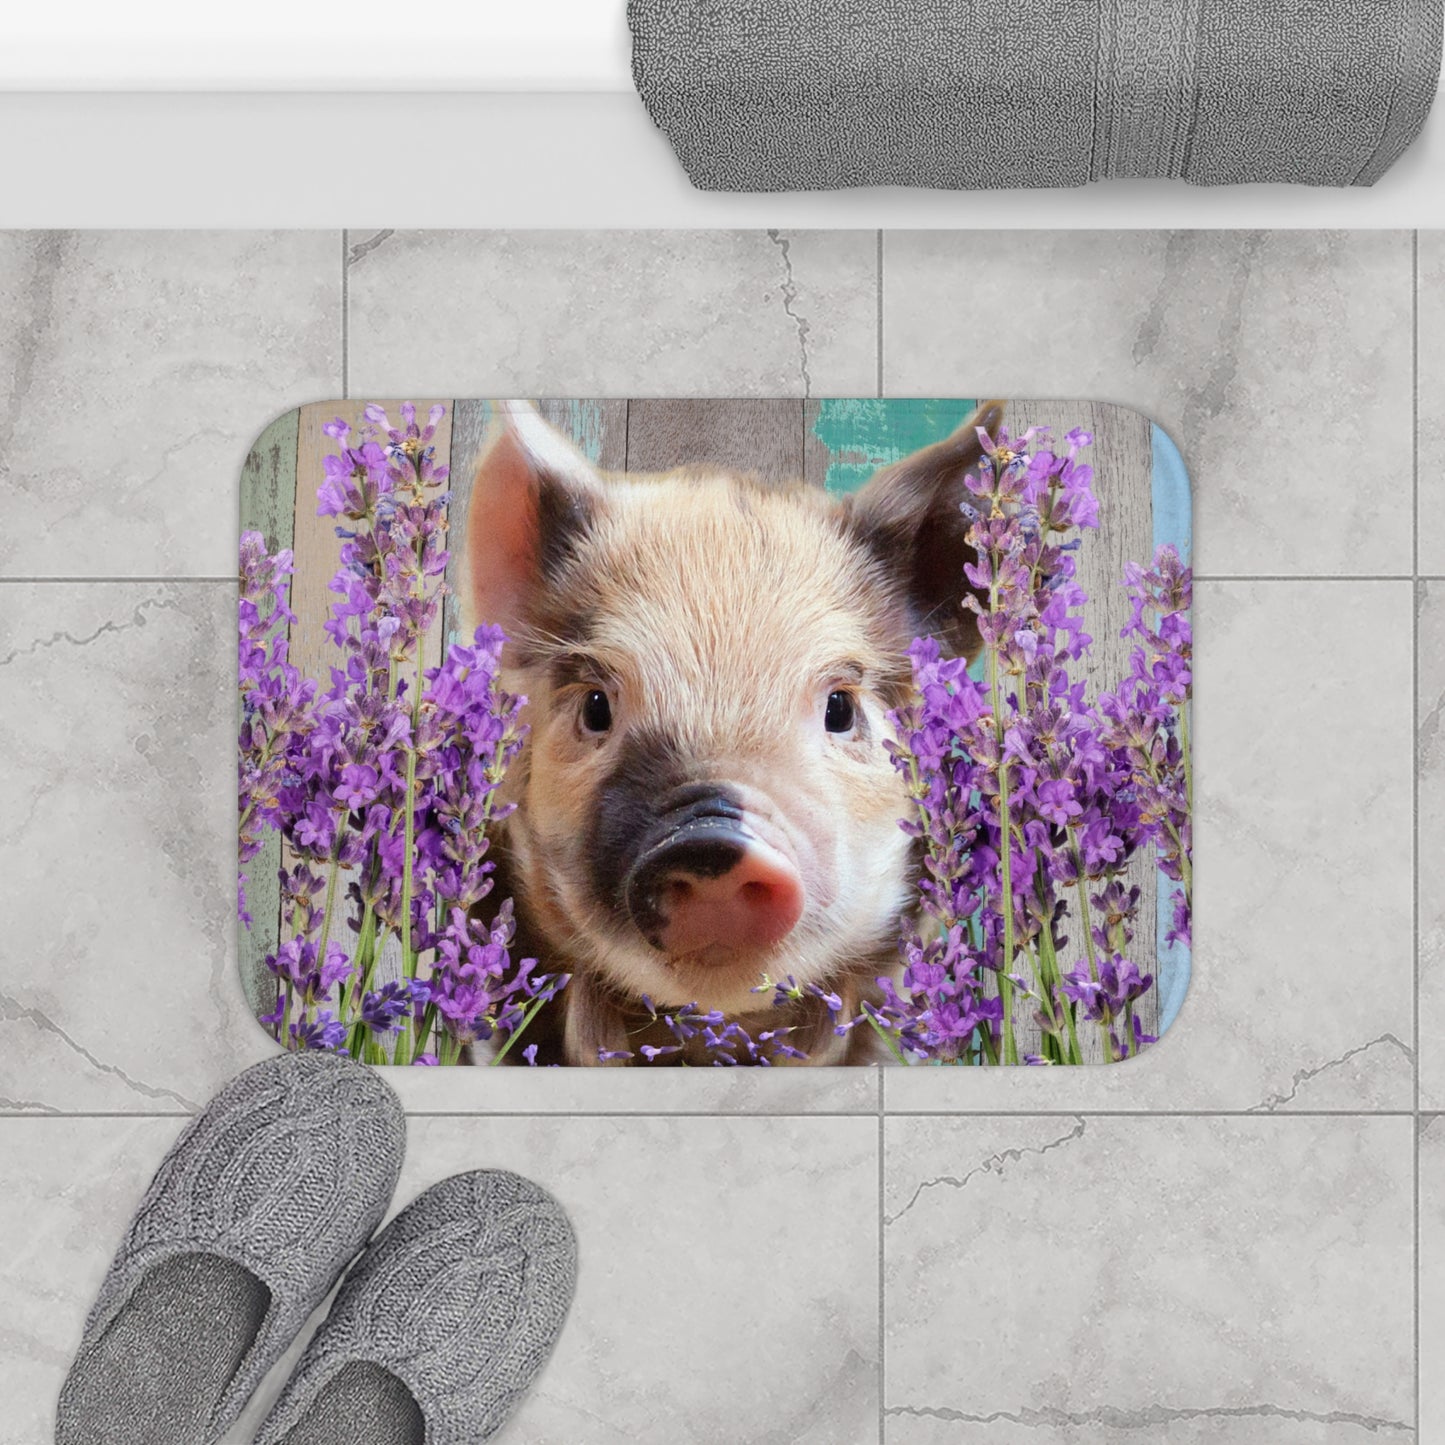 Piglet Bathroom Mat with Lavender Flowers